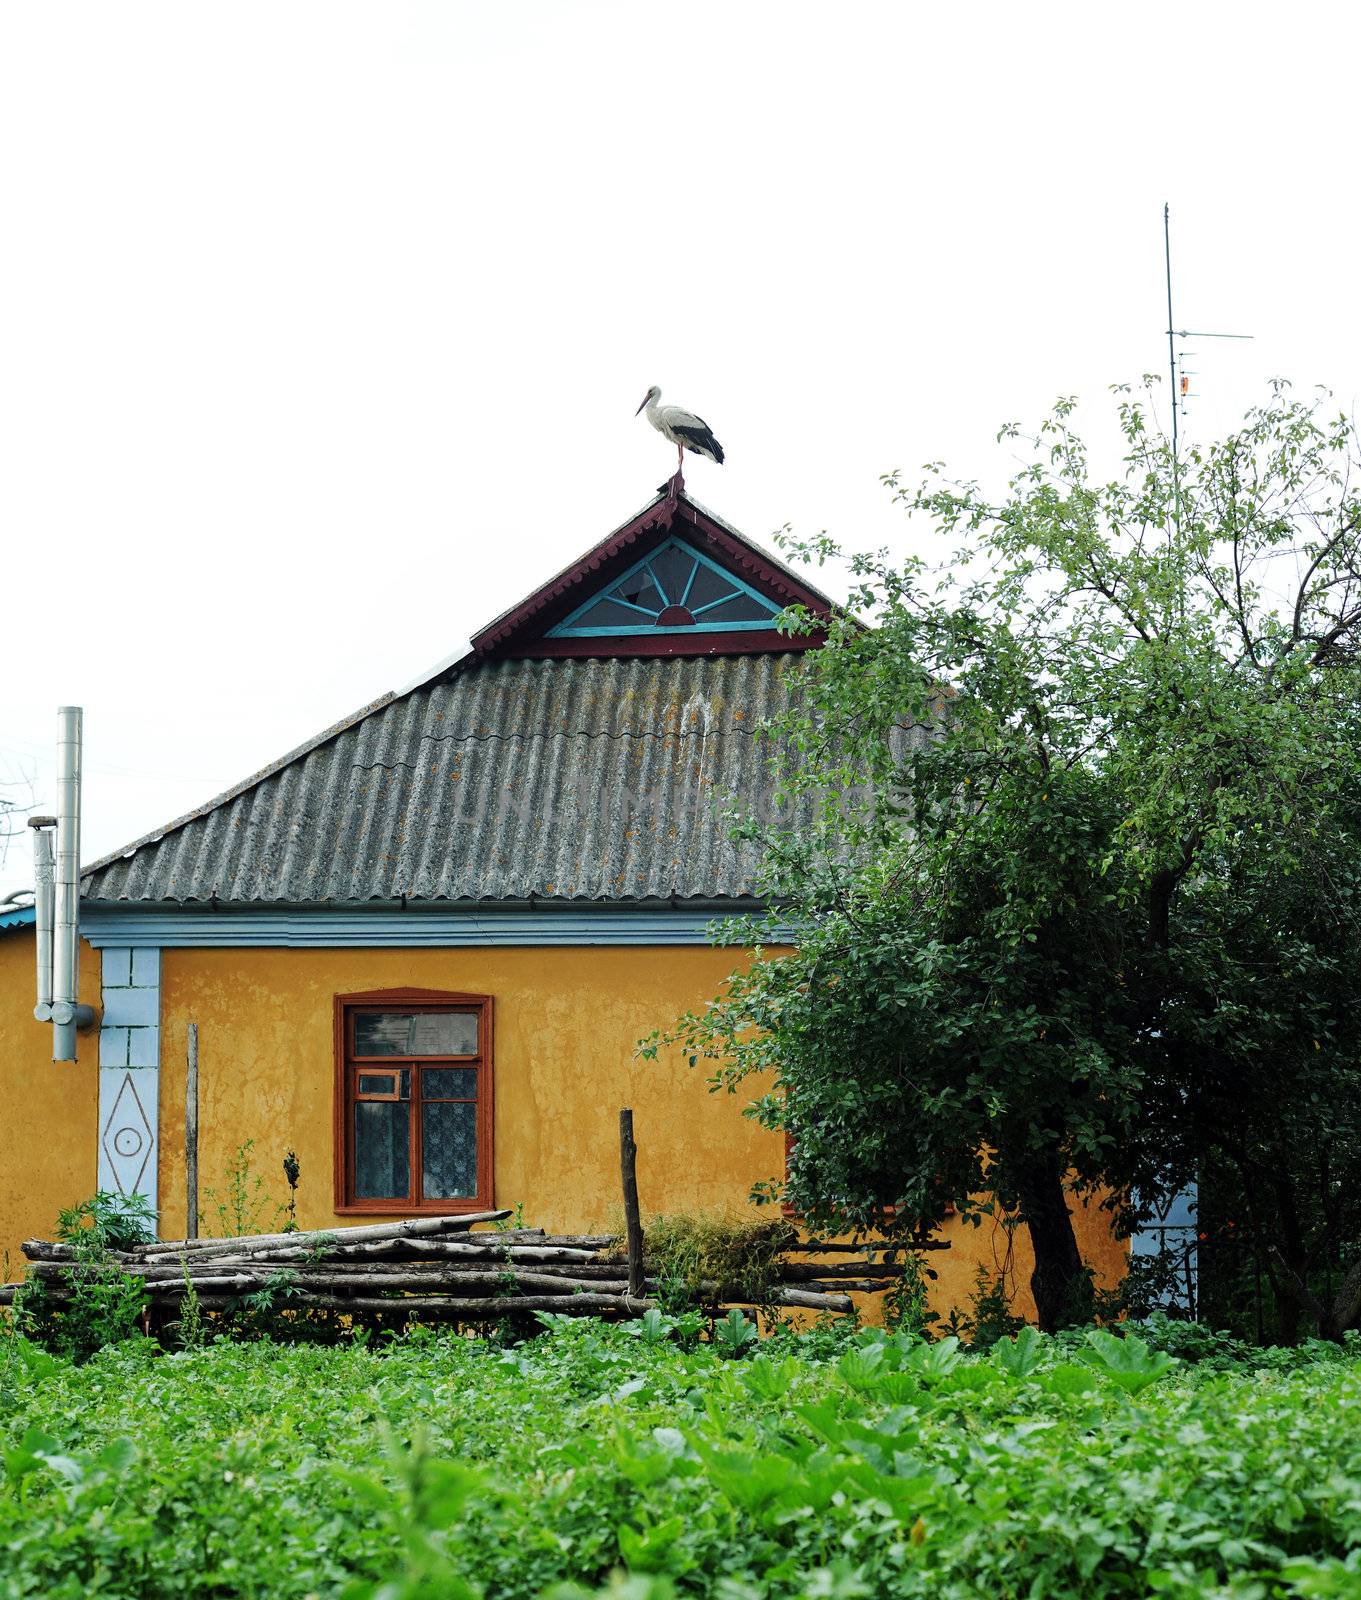 House and stork by velkol